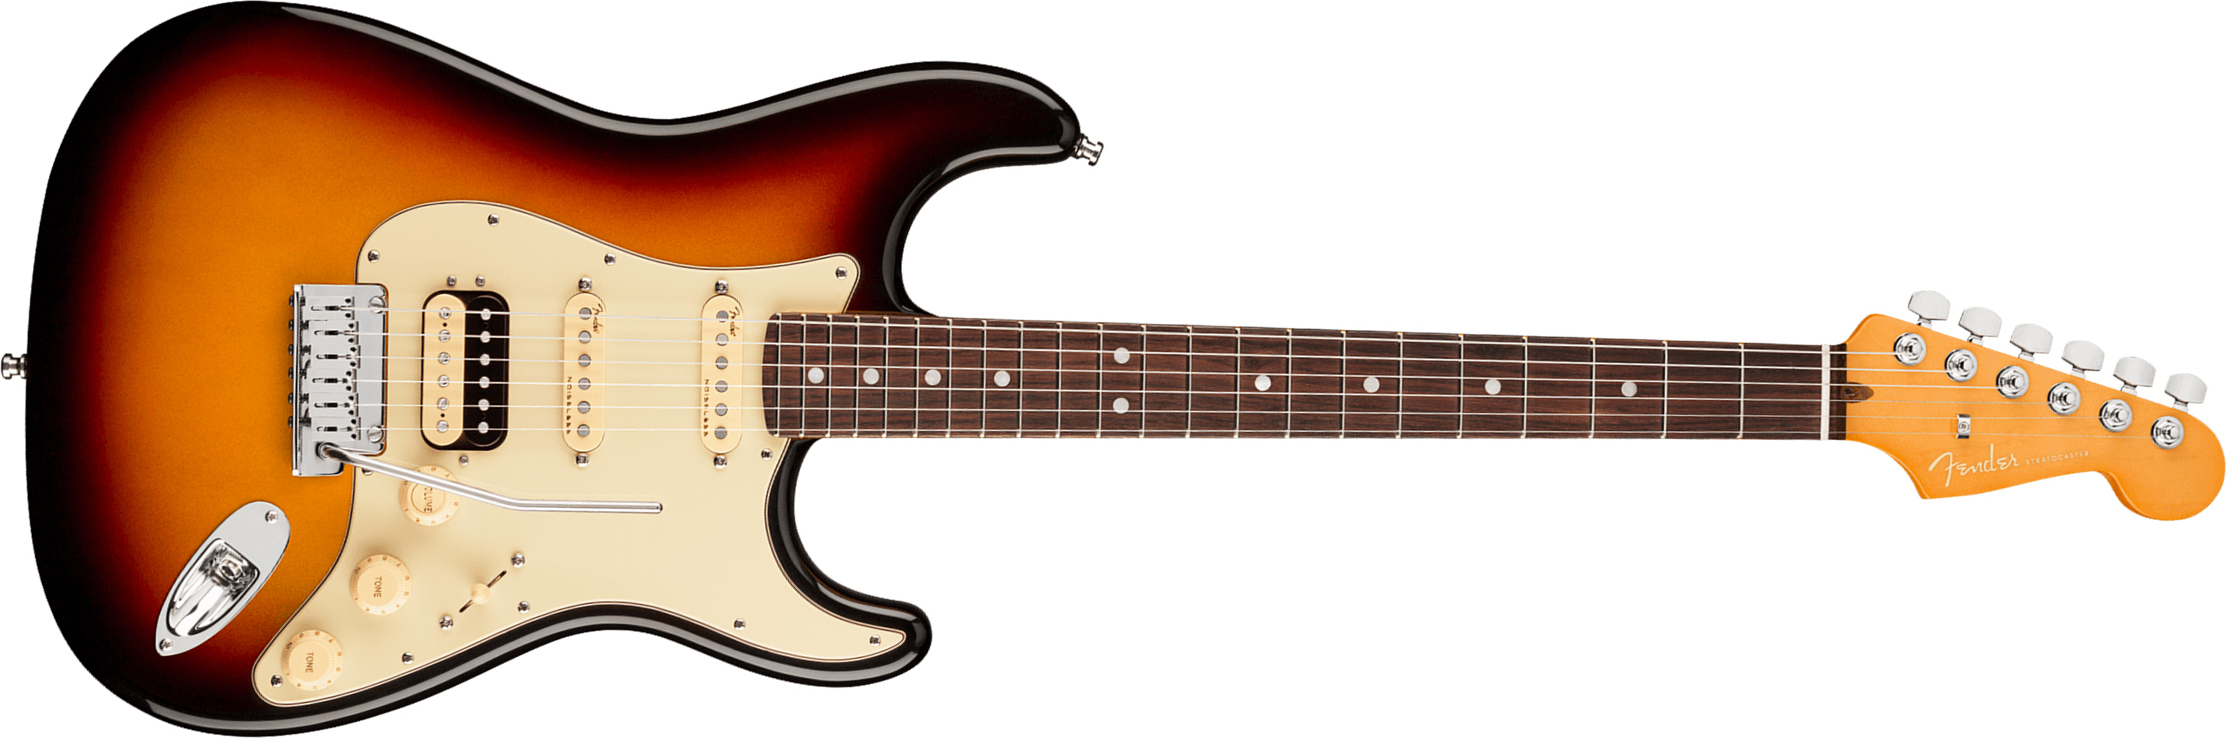 Fender Strat American Ultra Hss 2019 Usa Rw - Ultraburst - Guitare Électrique Forme Str - Main picture